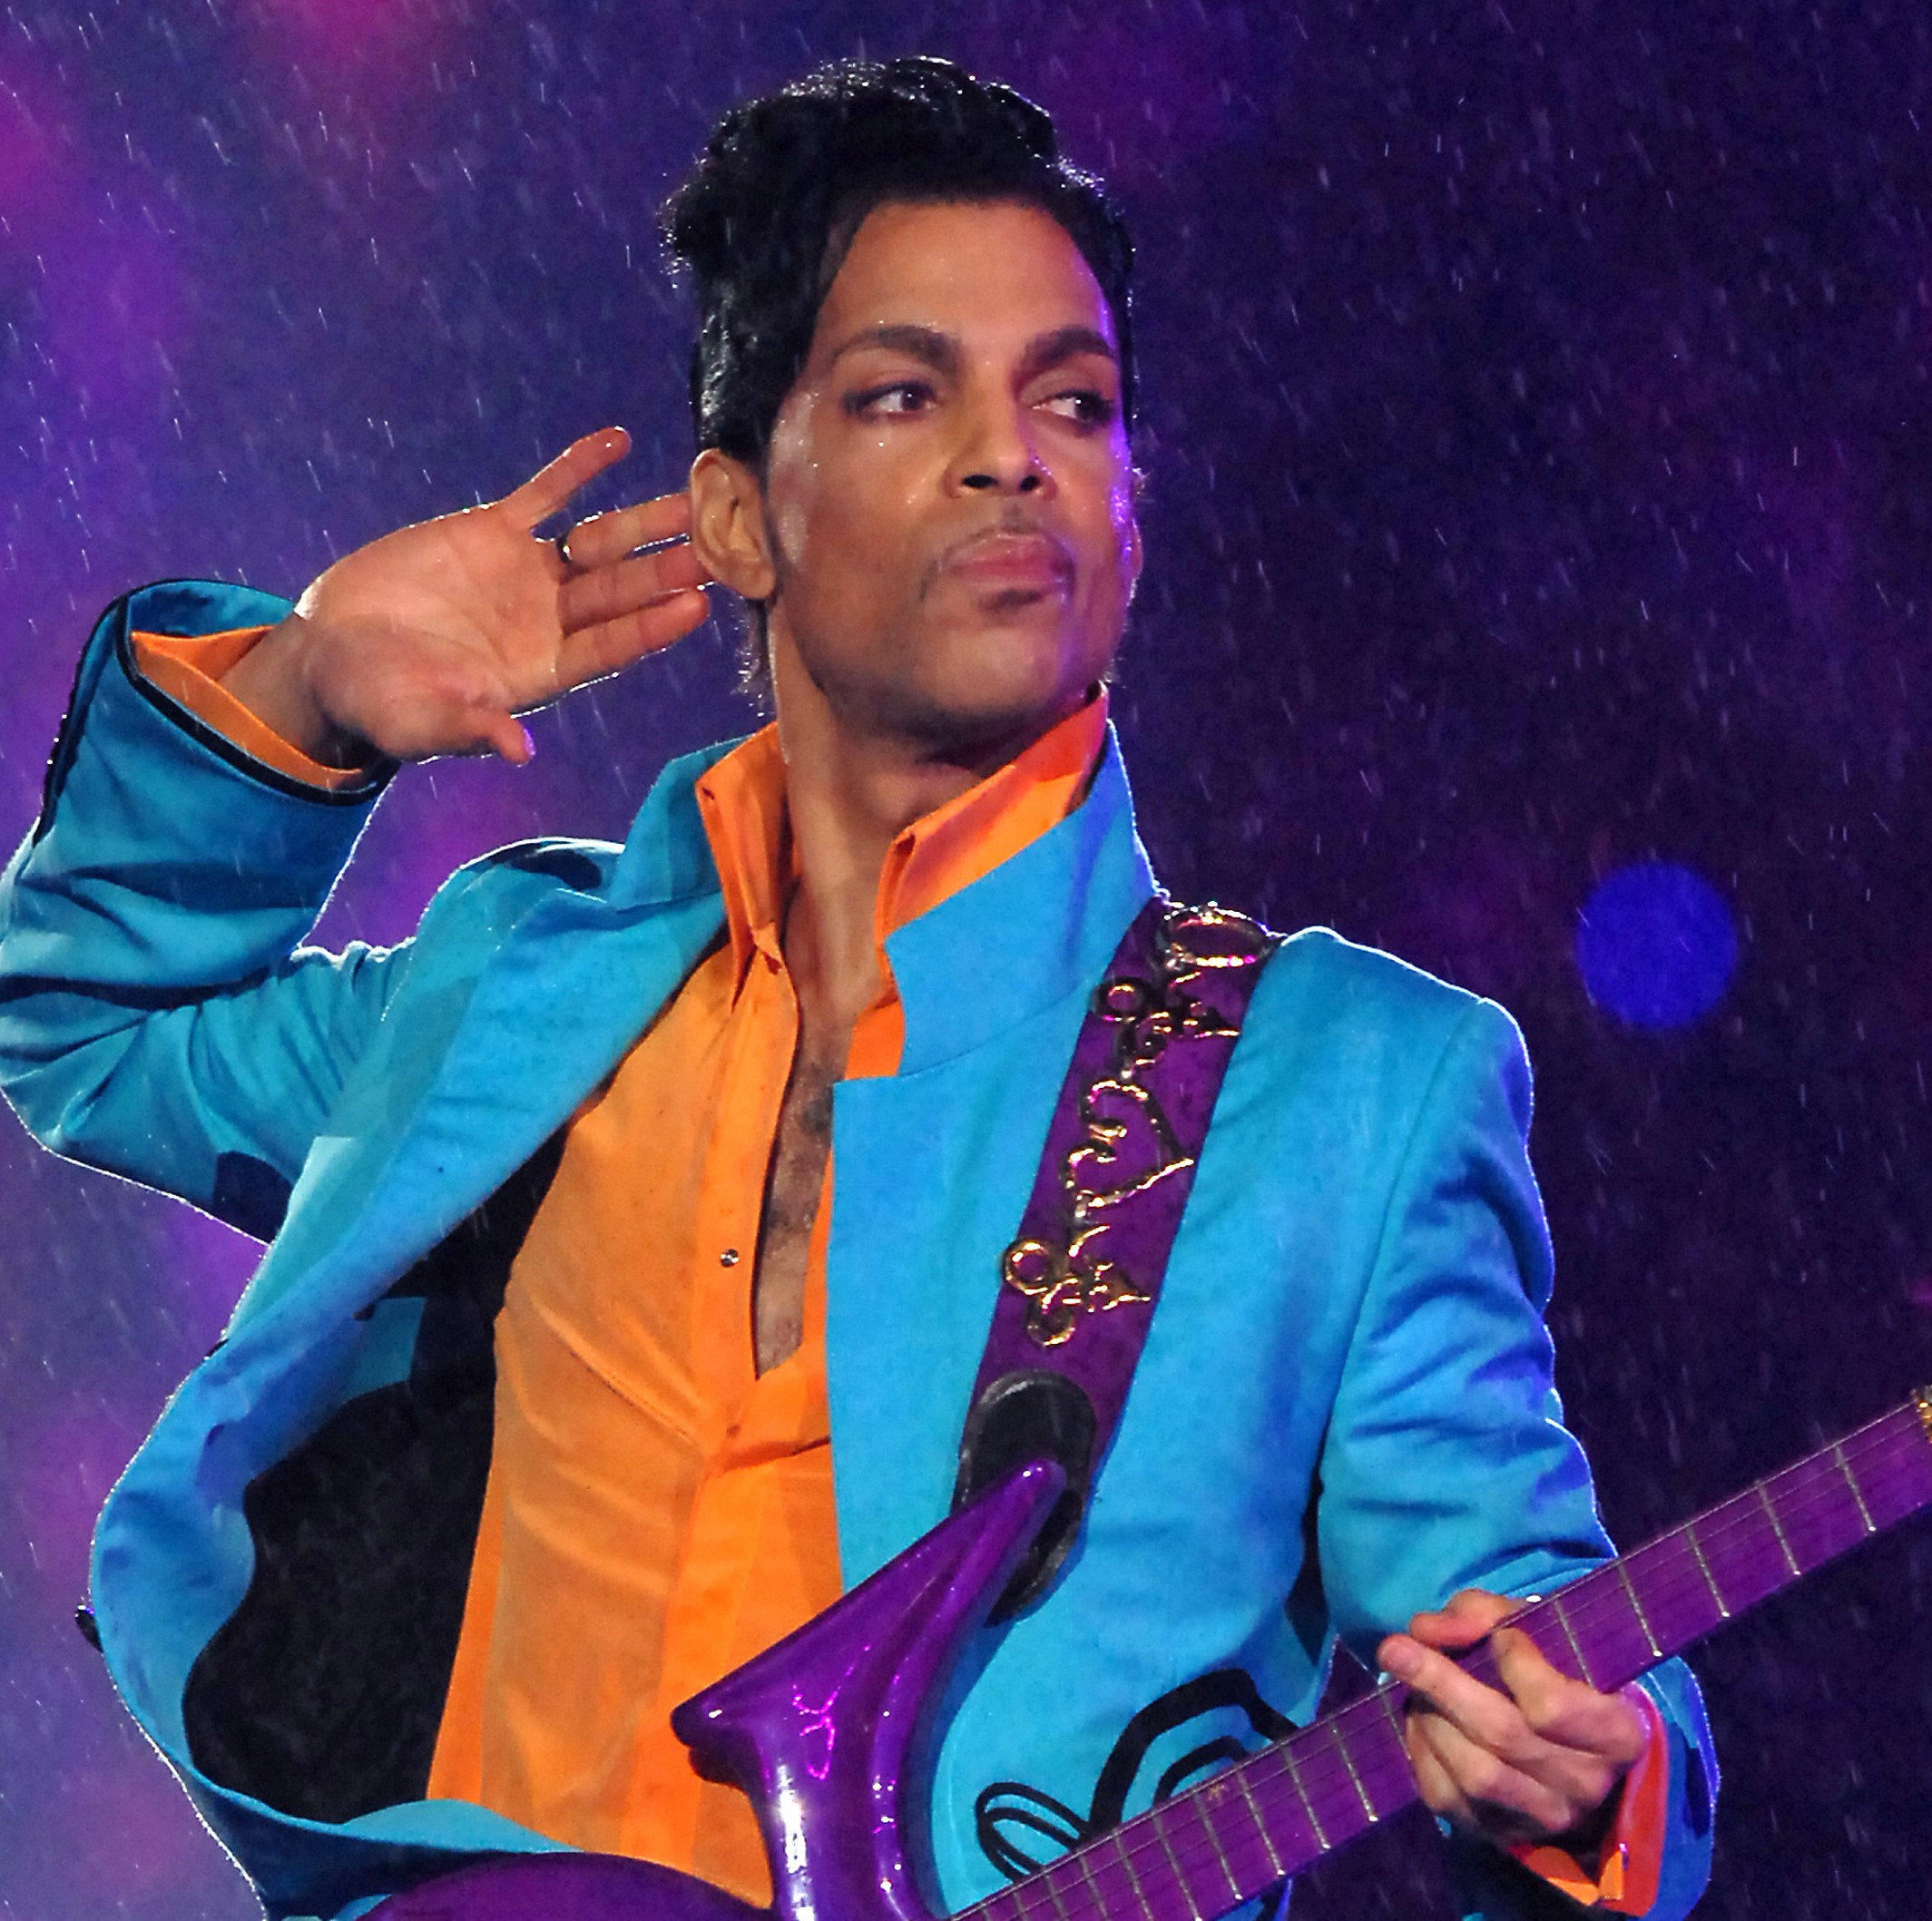 Prince wearing blue